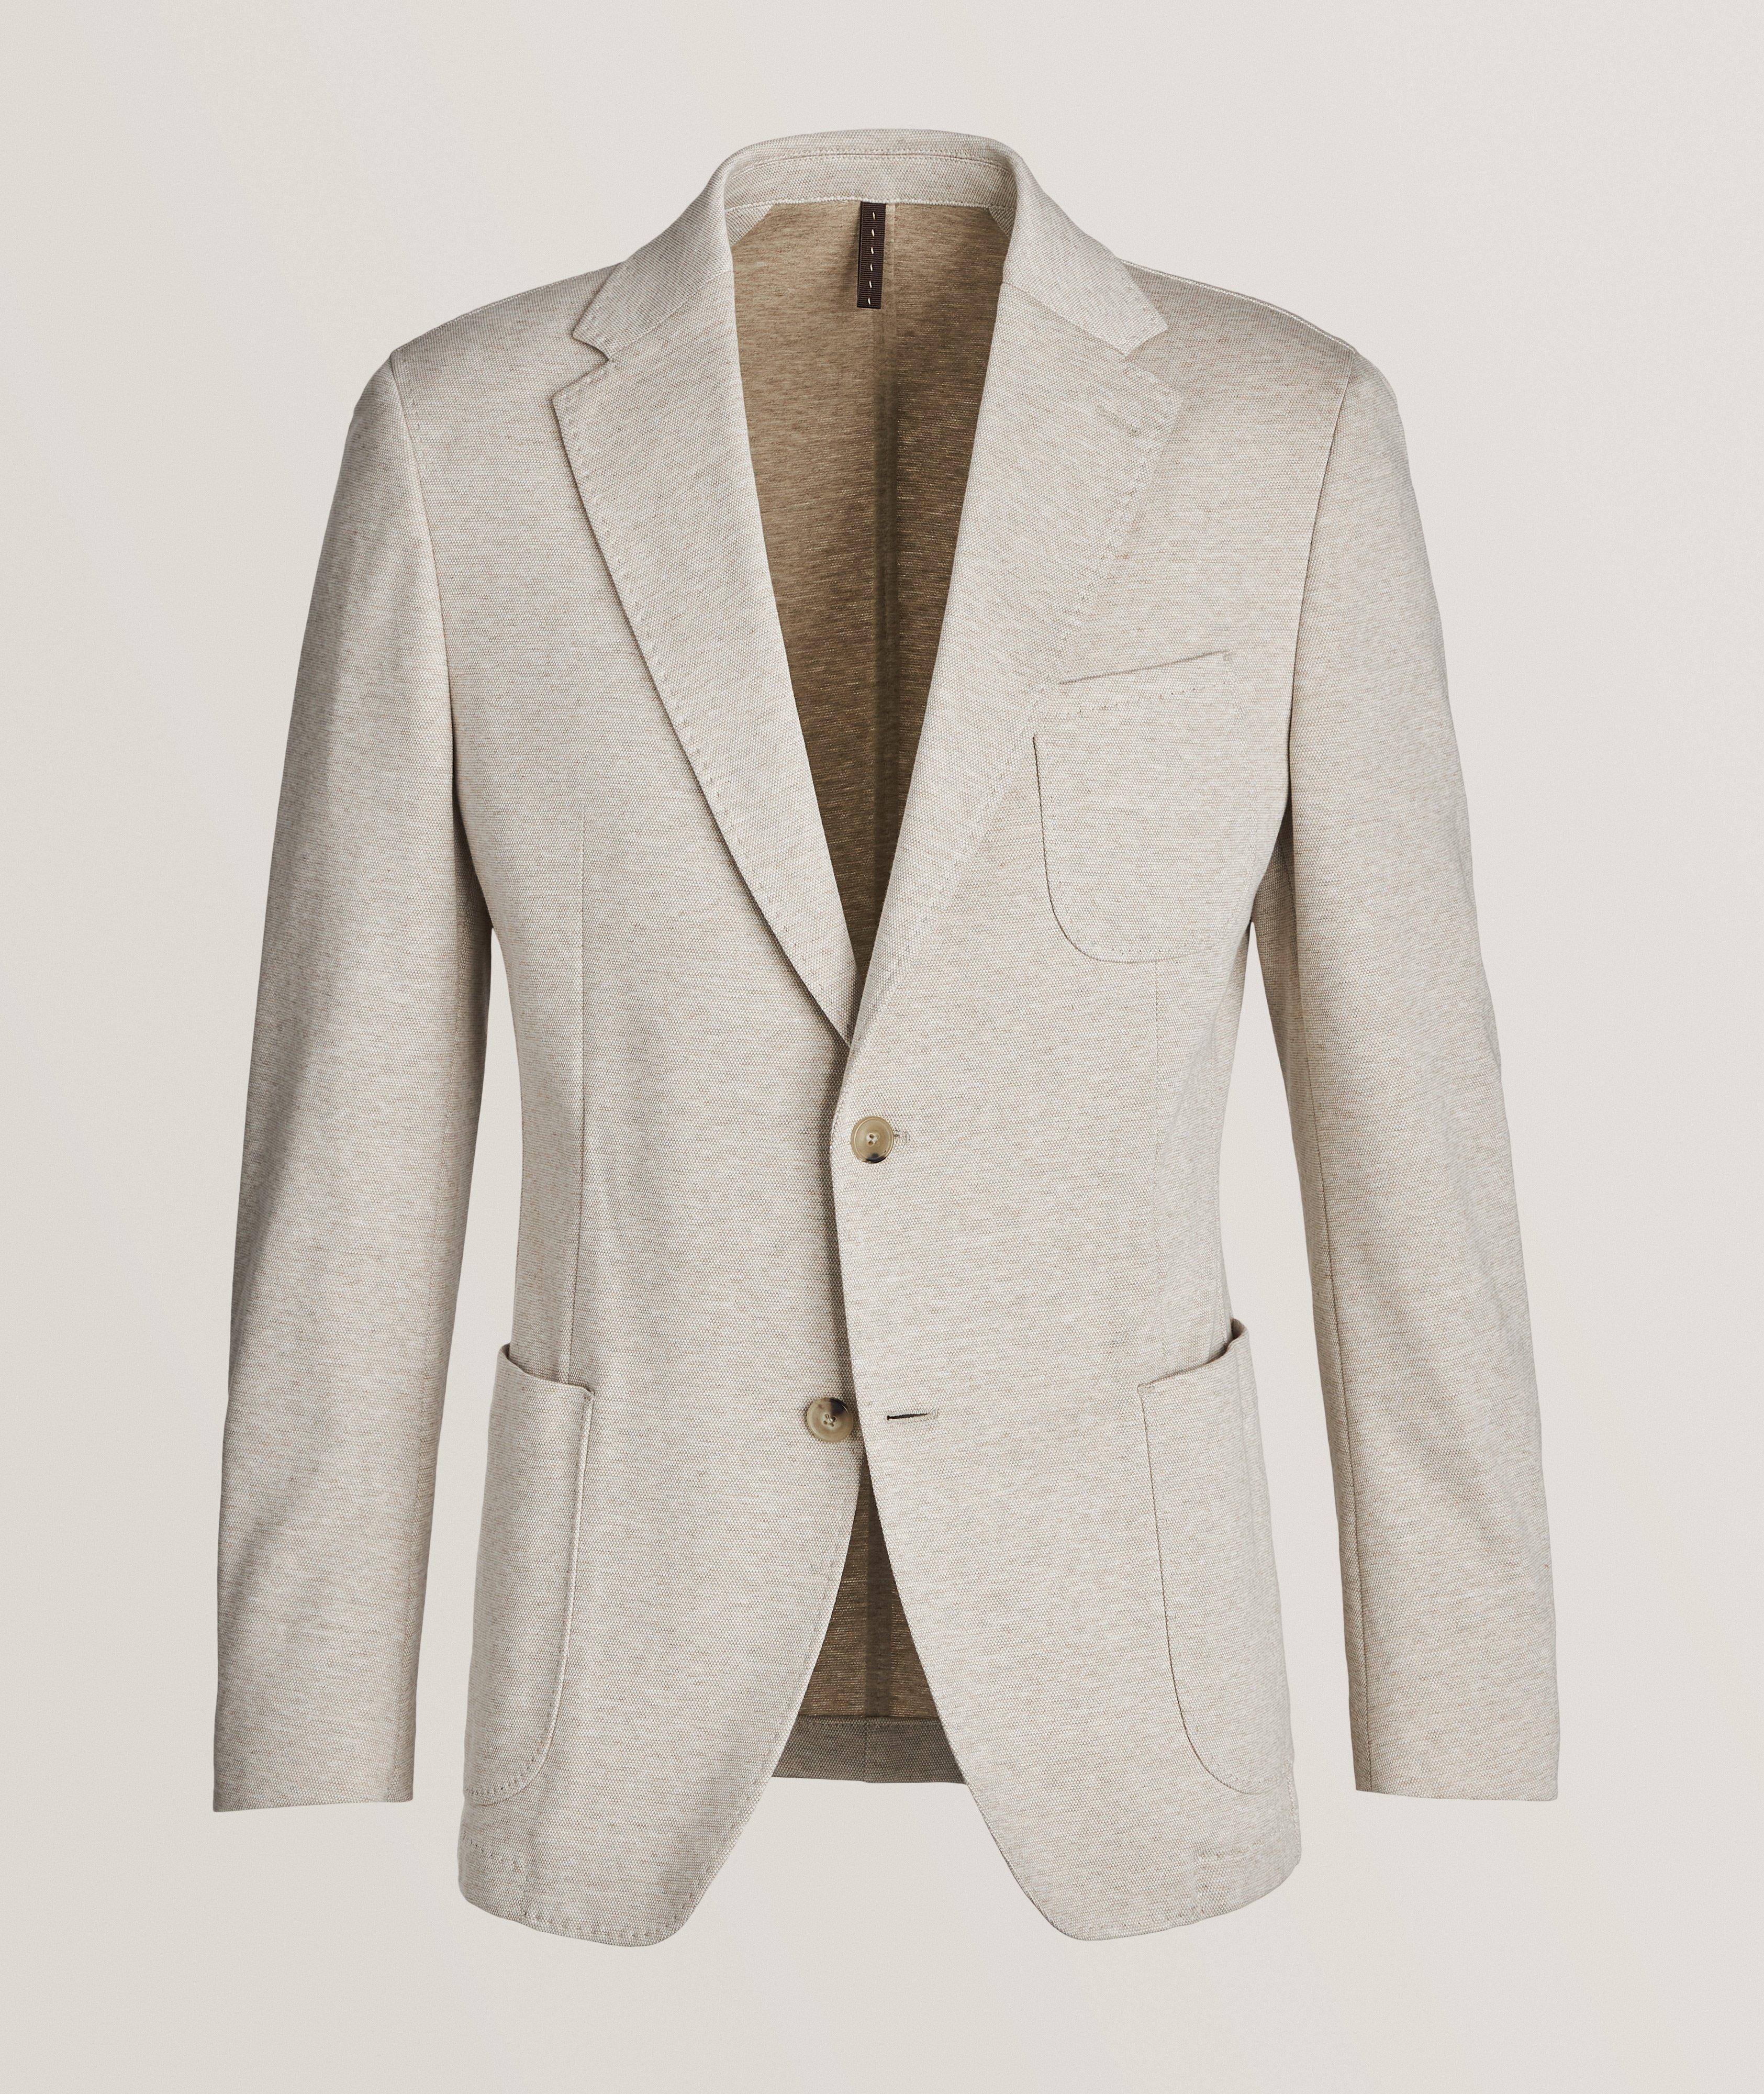 Maglia Textured Cotton-Blend Sport Jacket image 0